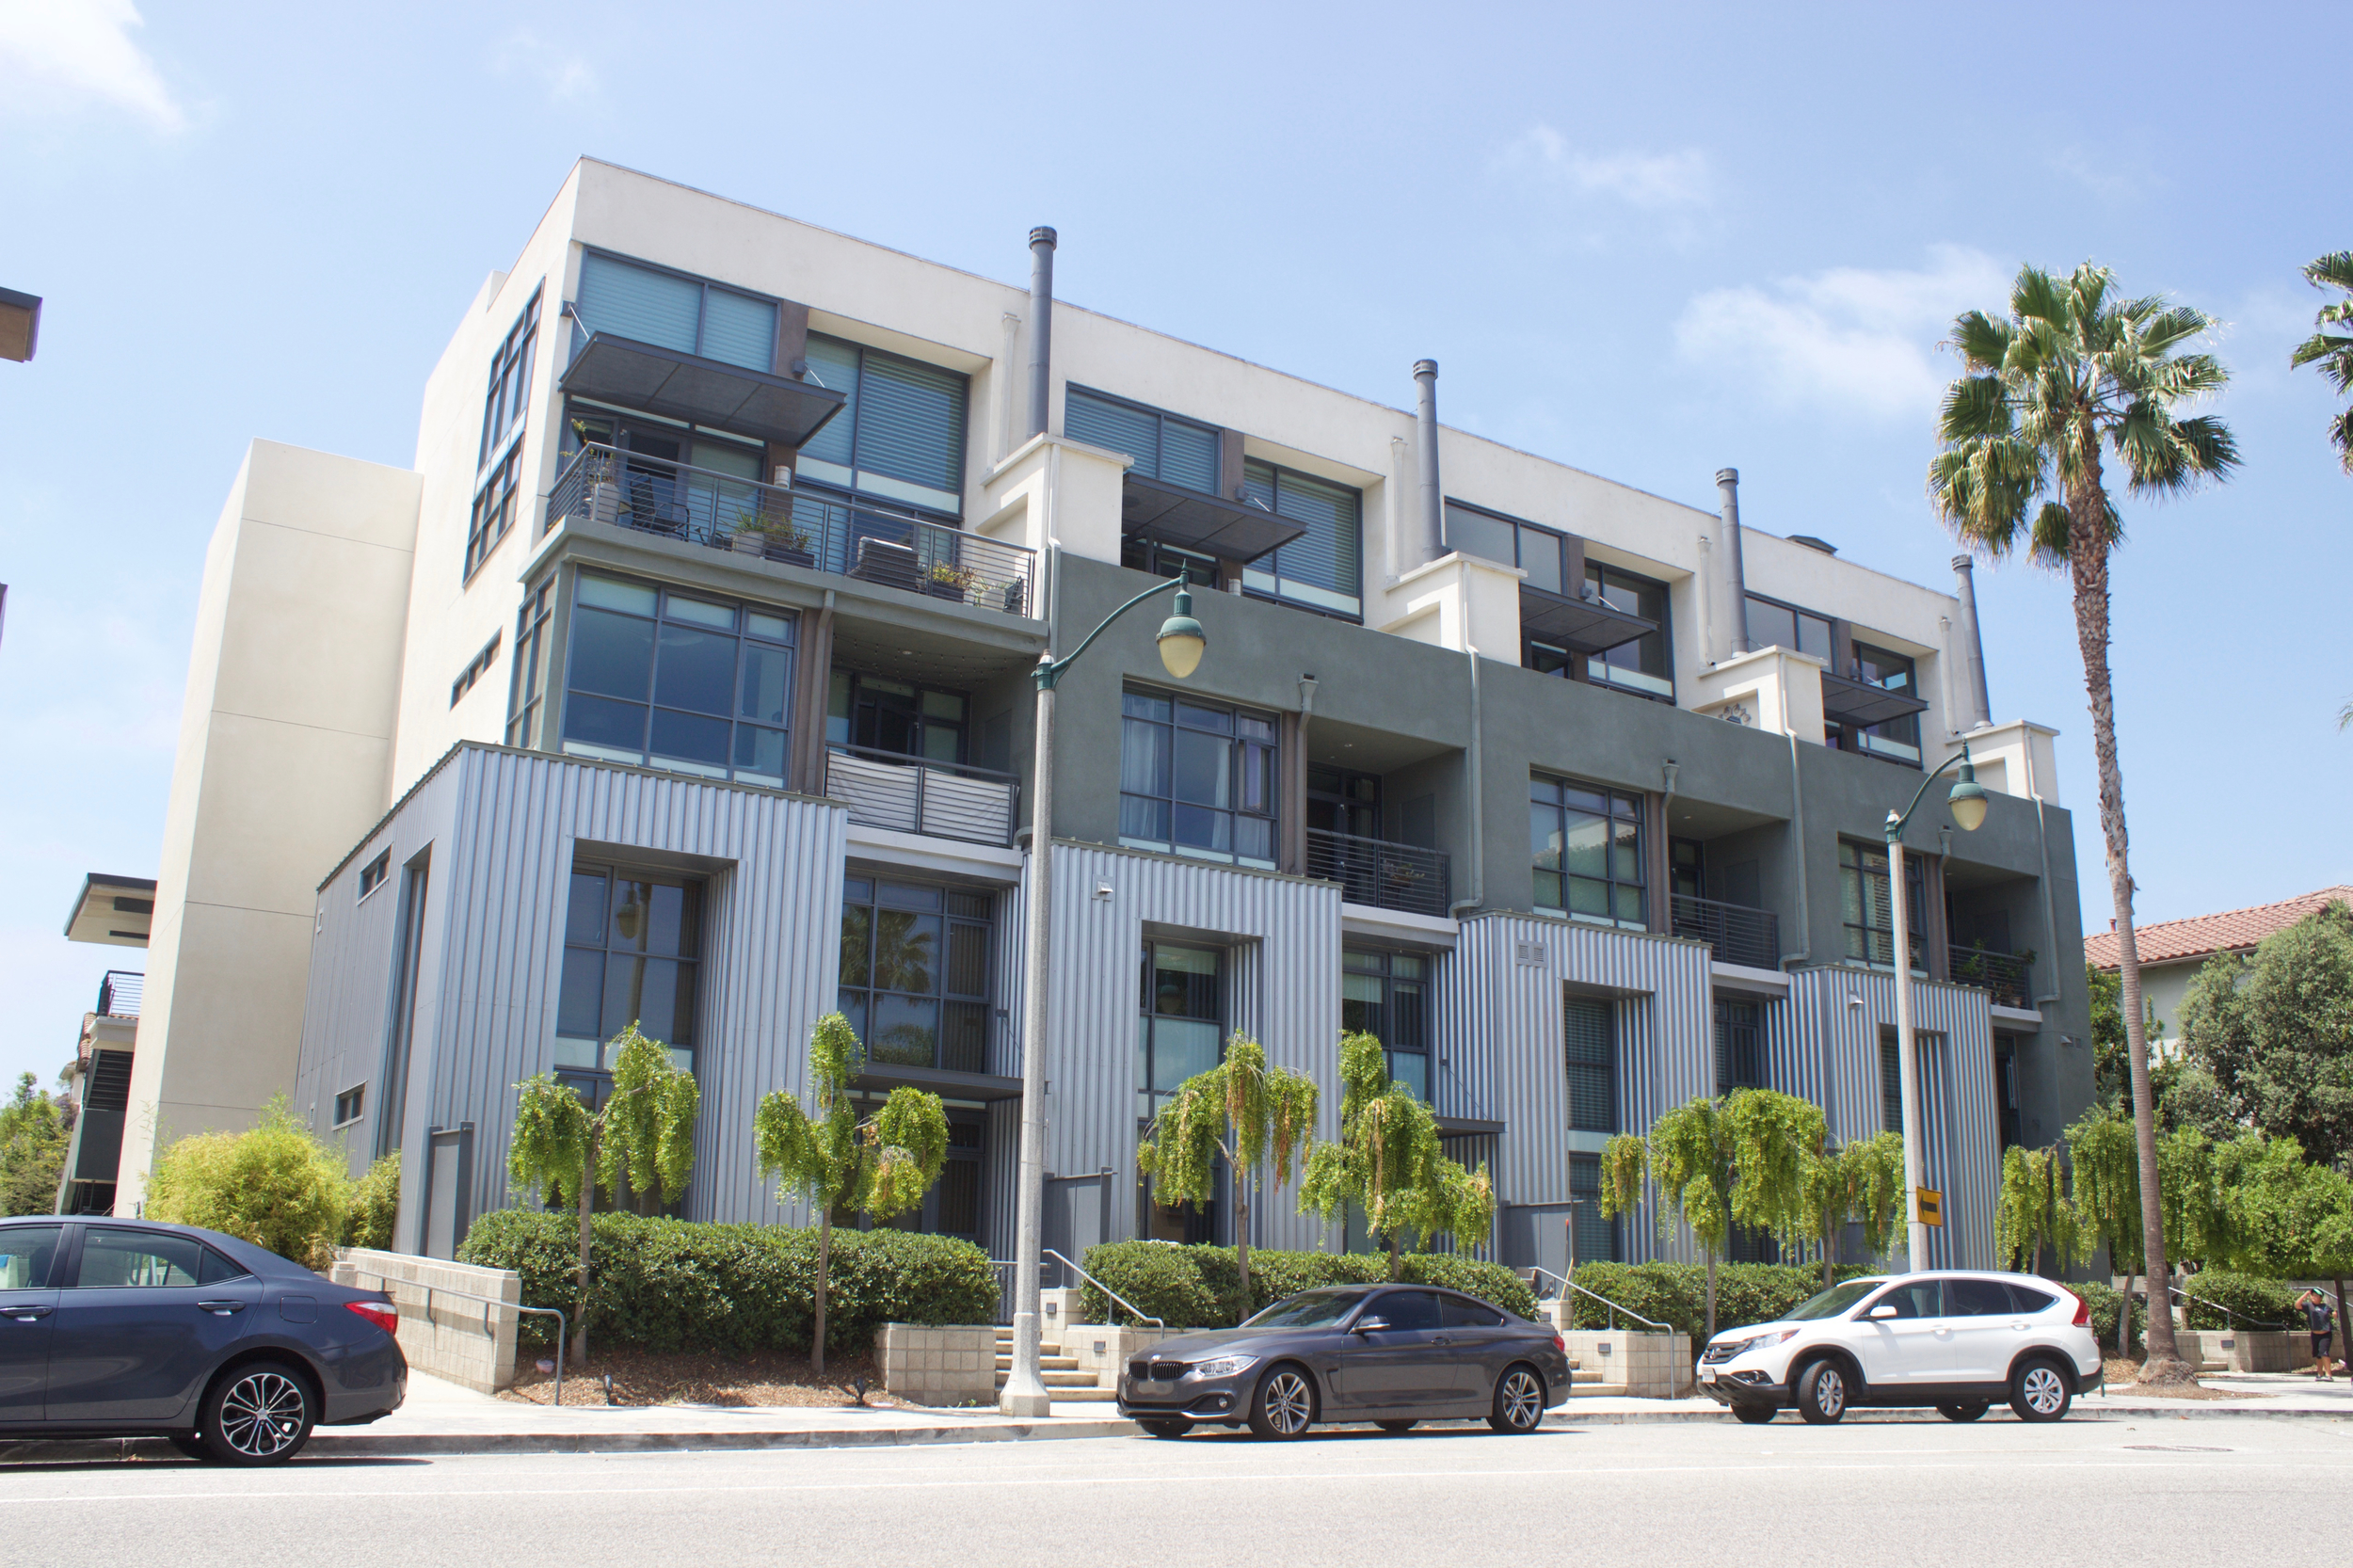 Three story modern metal, grey, and white condominium with street parking.